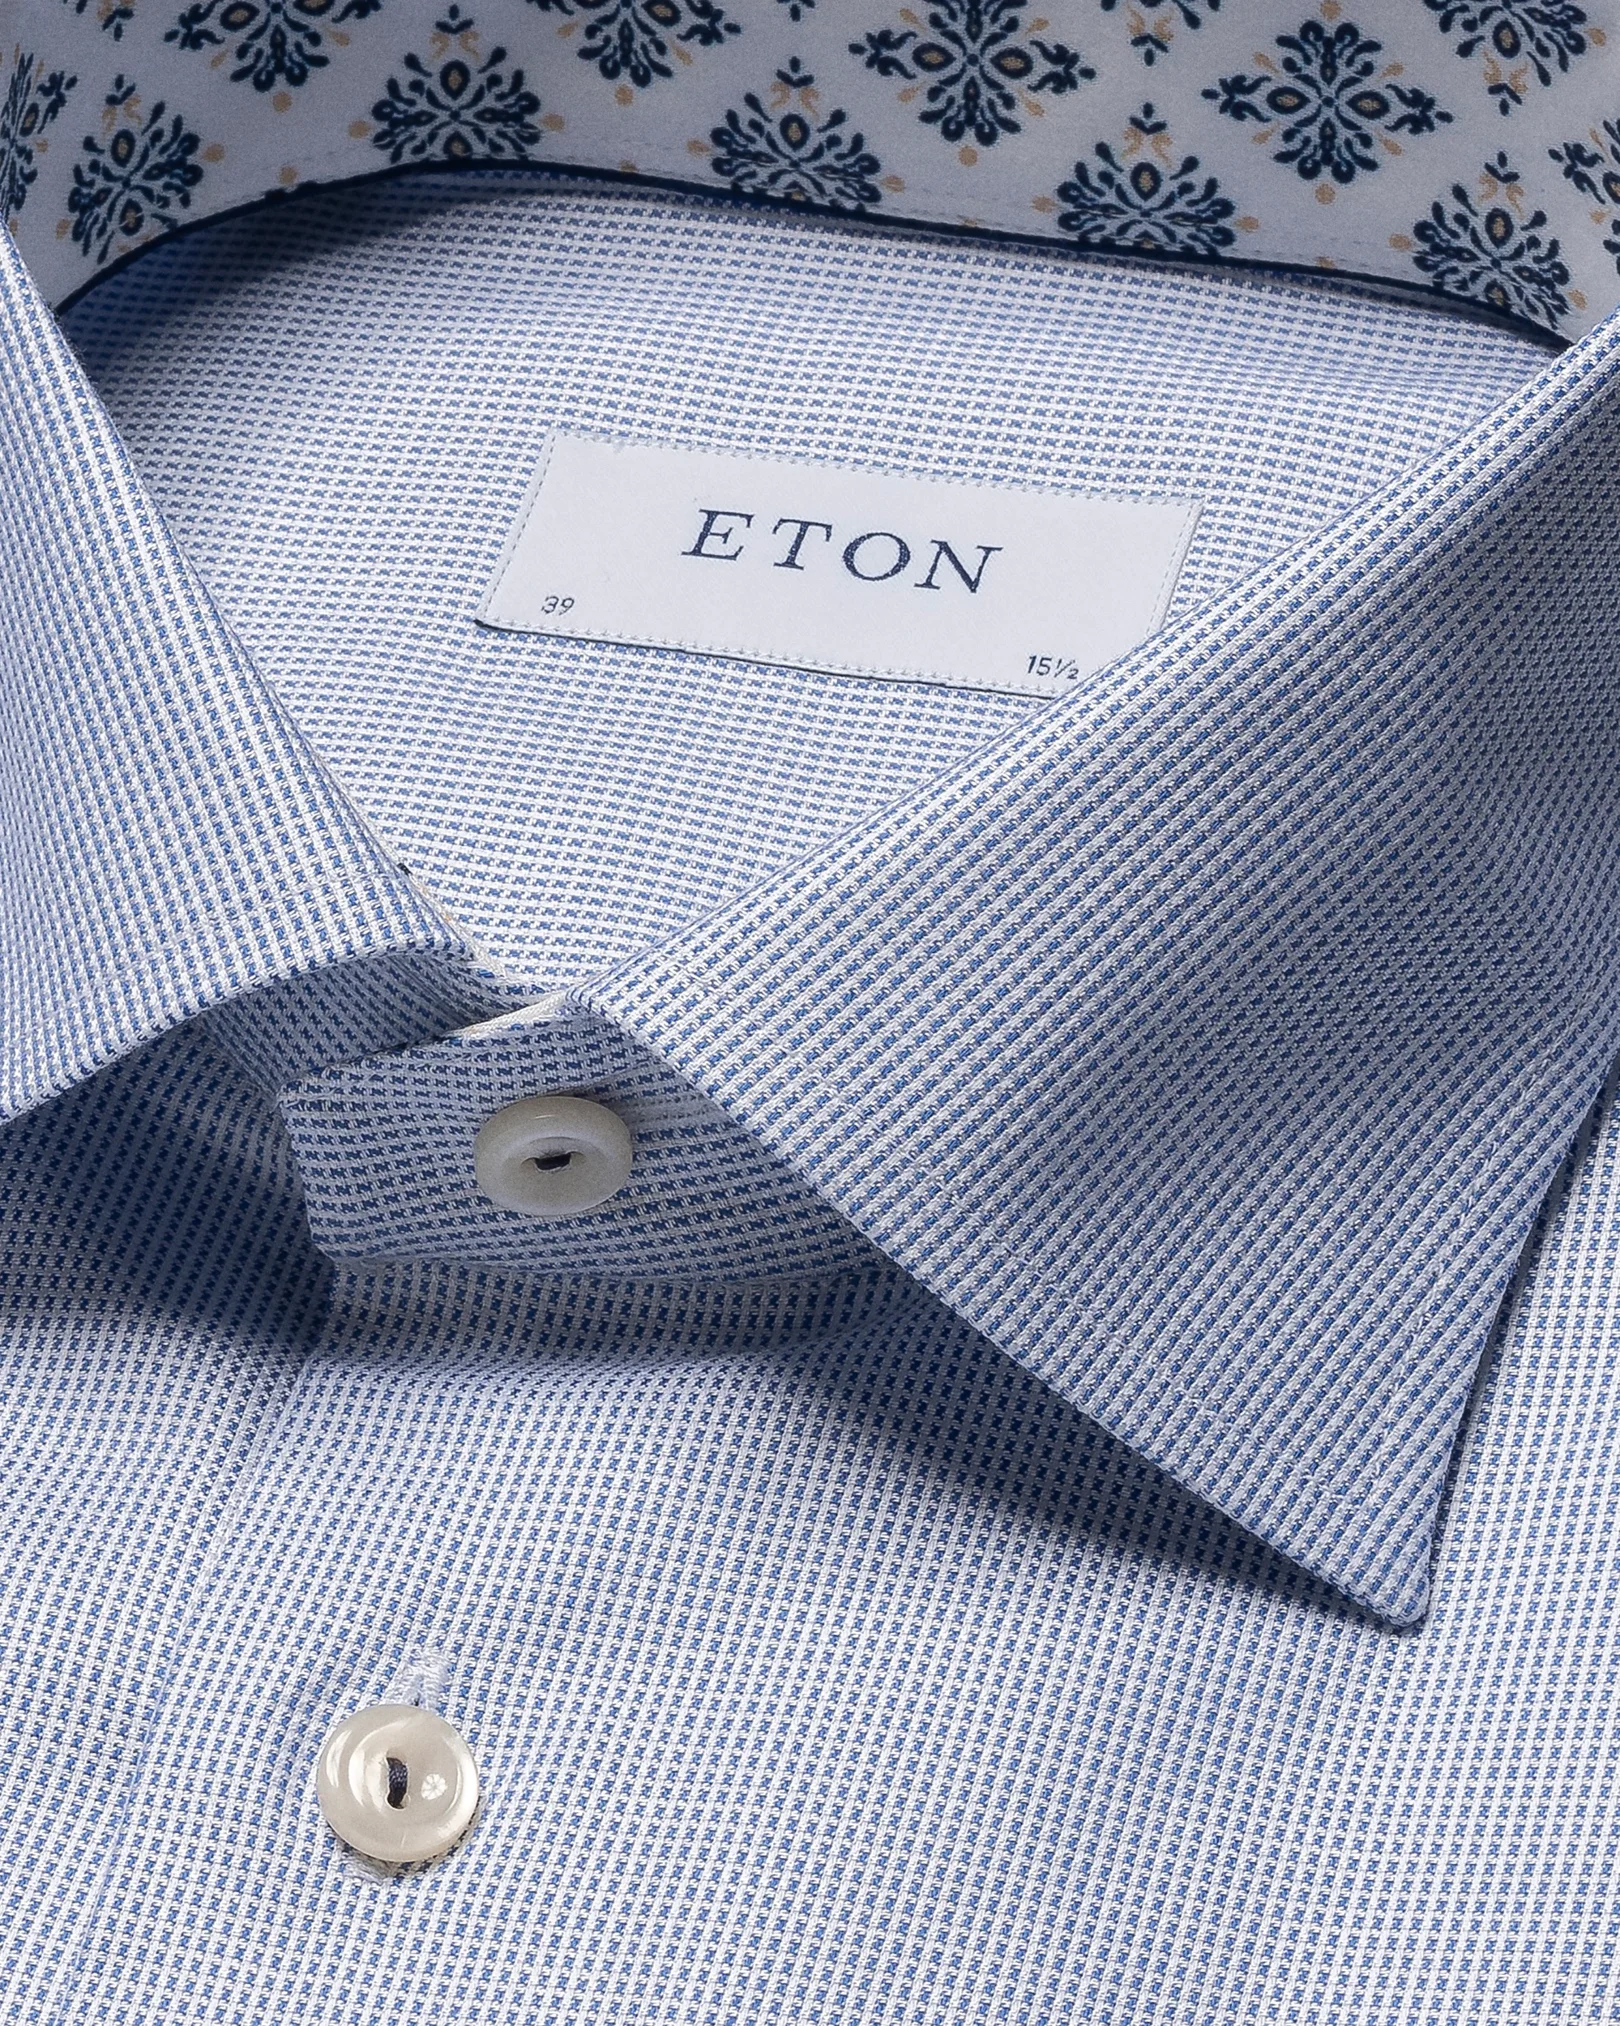 Eton - dark blue twill cut away special details